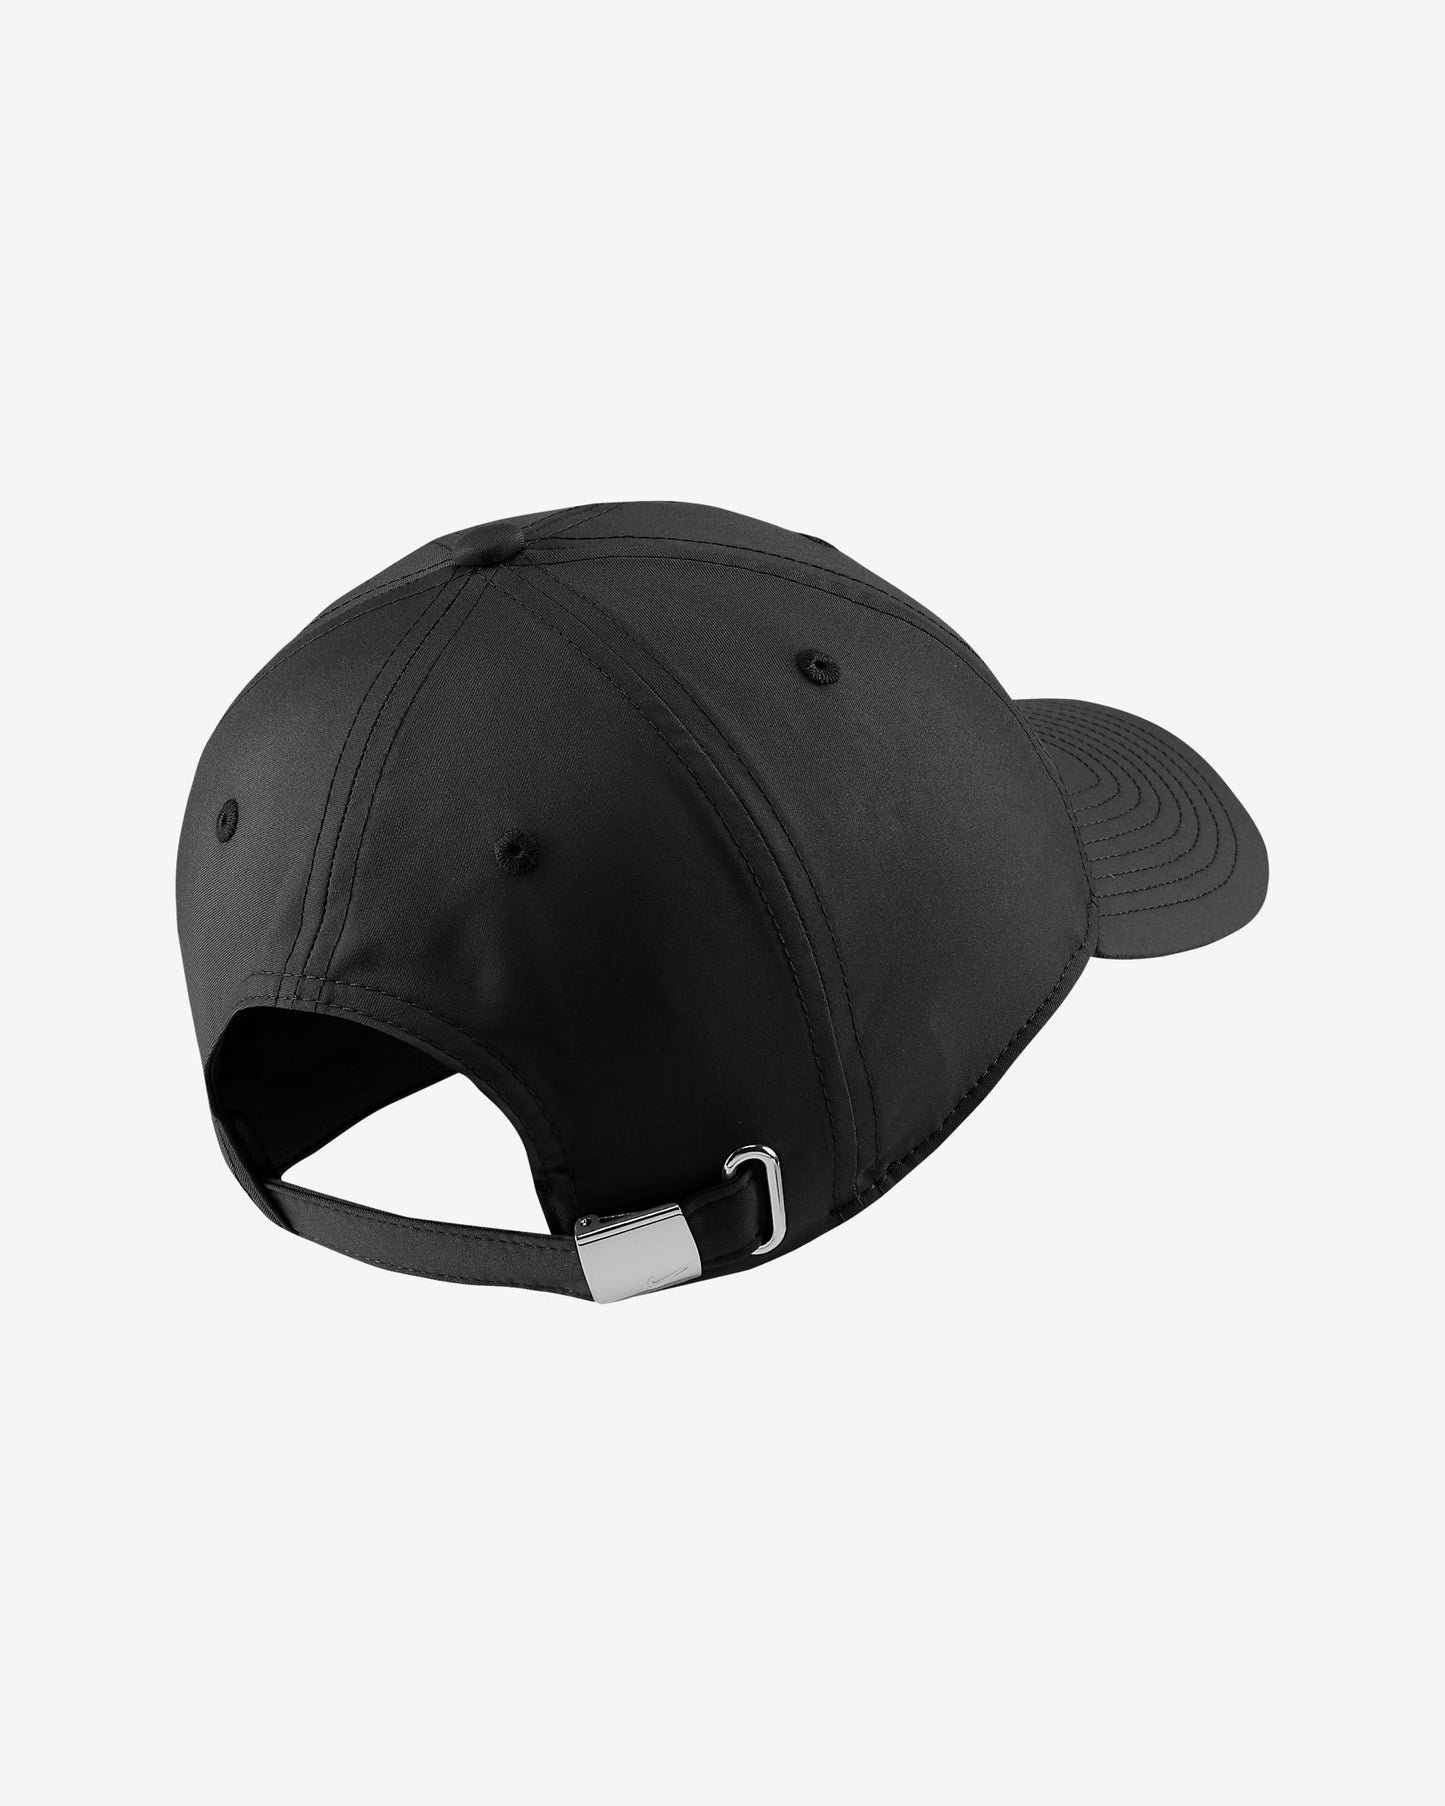 Nike Unisex Metal Swoosh Black/Silver H86 Cap - (943092 010) - NC1 - F